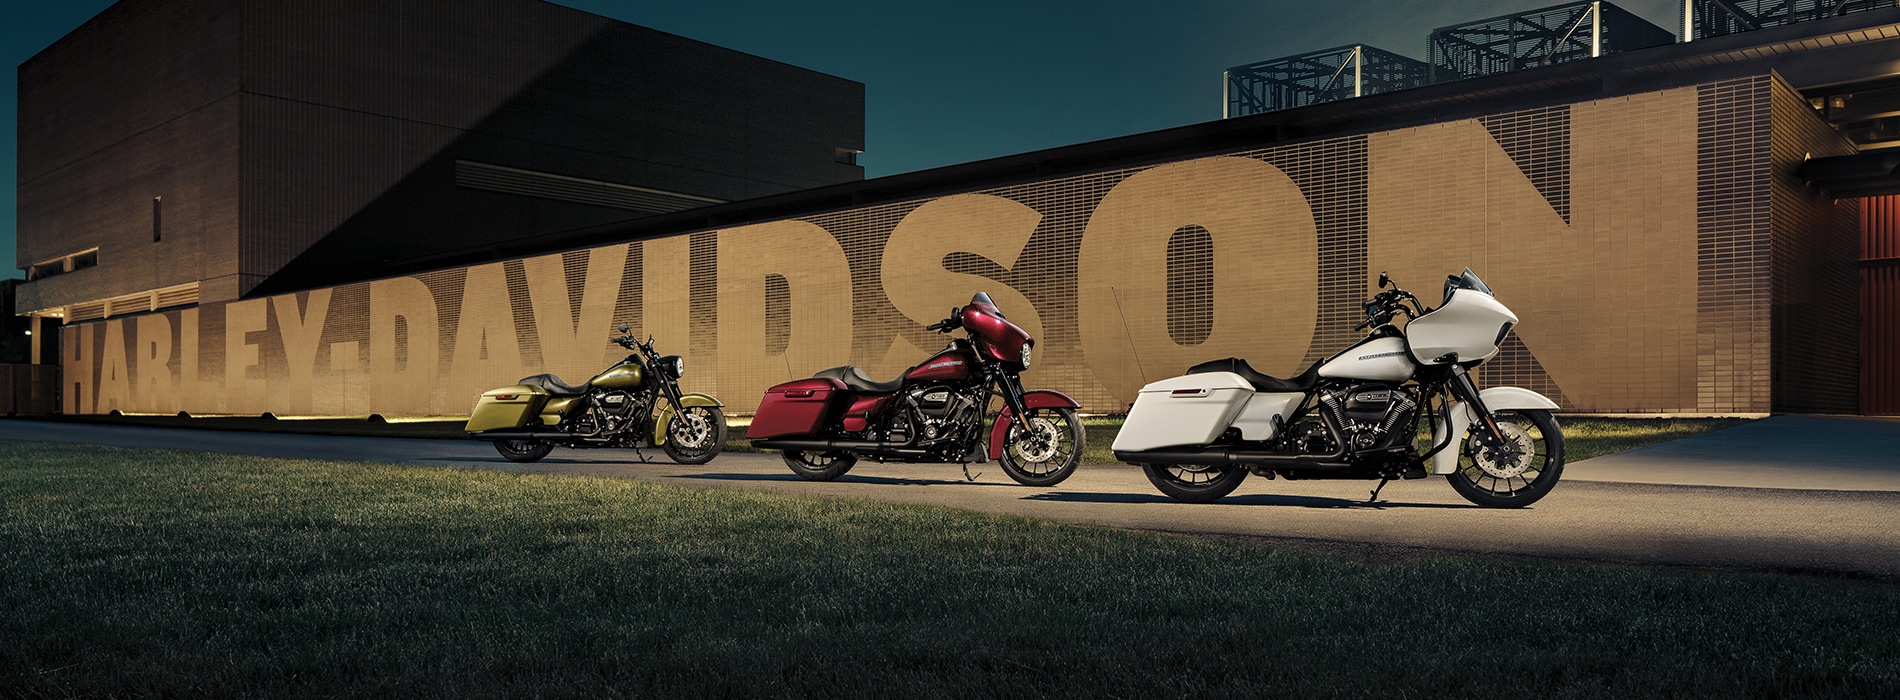 2018 Harley Davidson Wallpapers